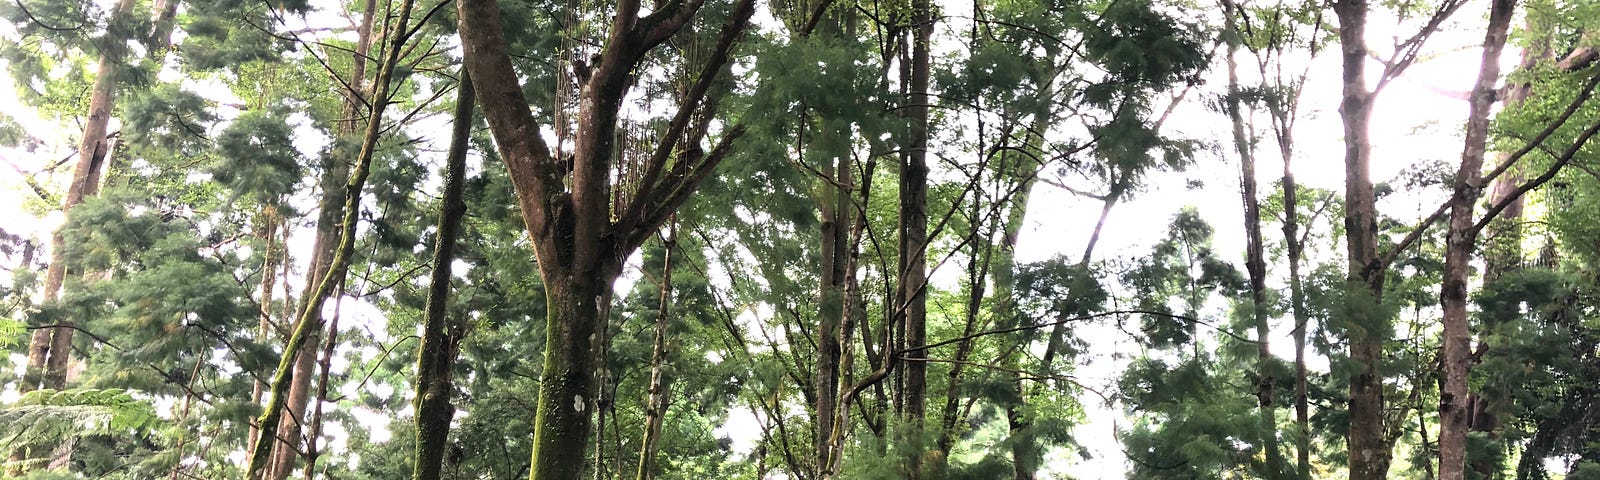 Tall trees at the Singapore Botanic Gardens